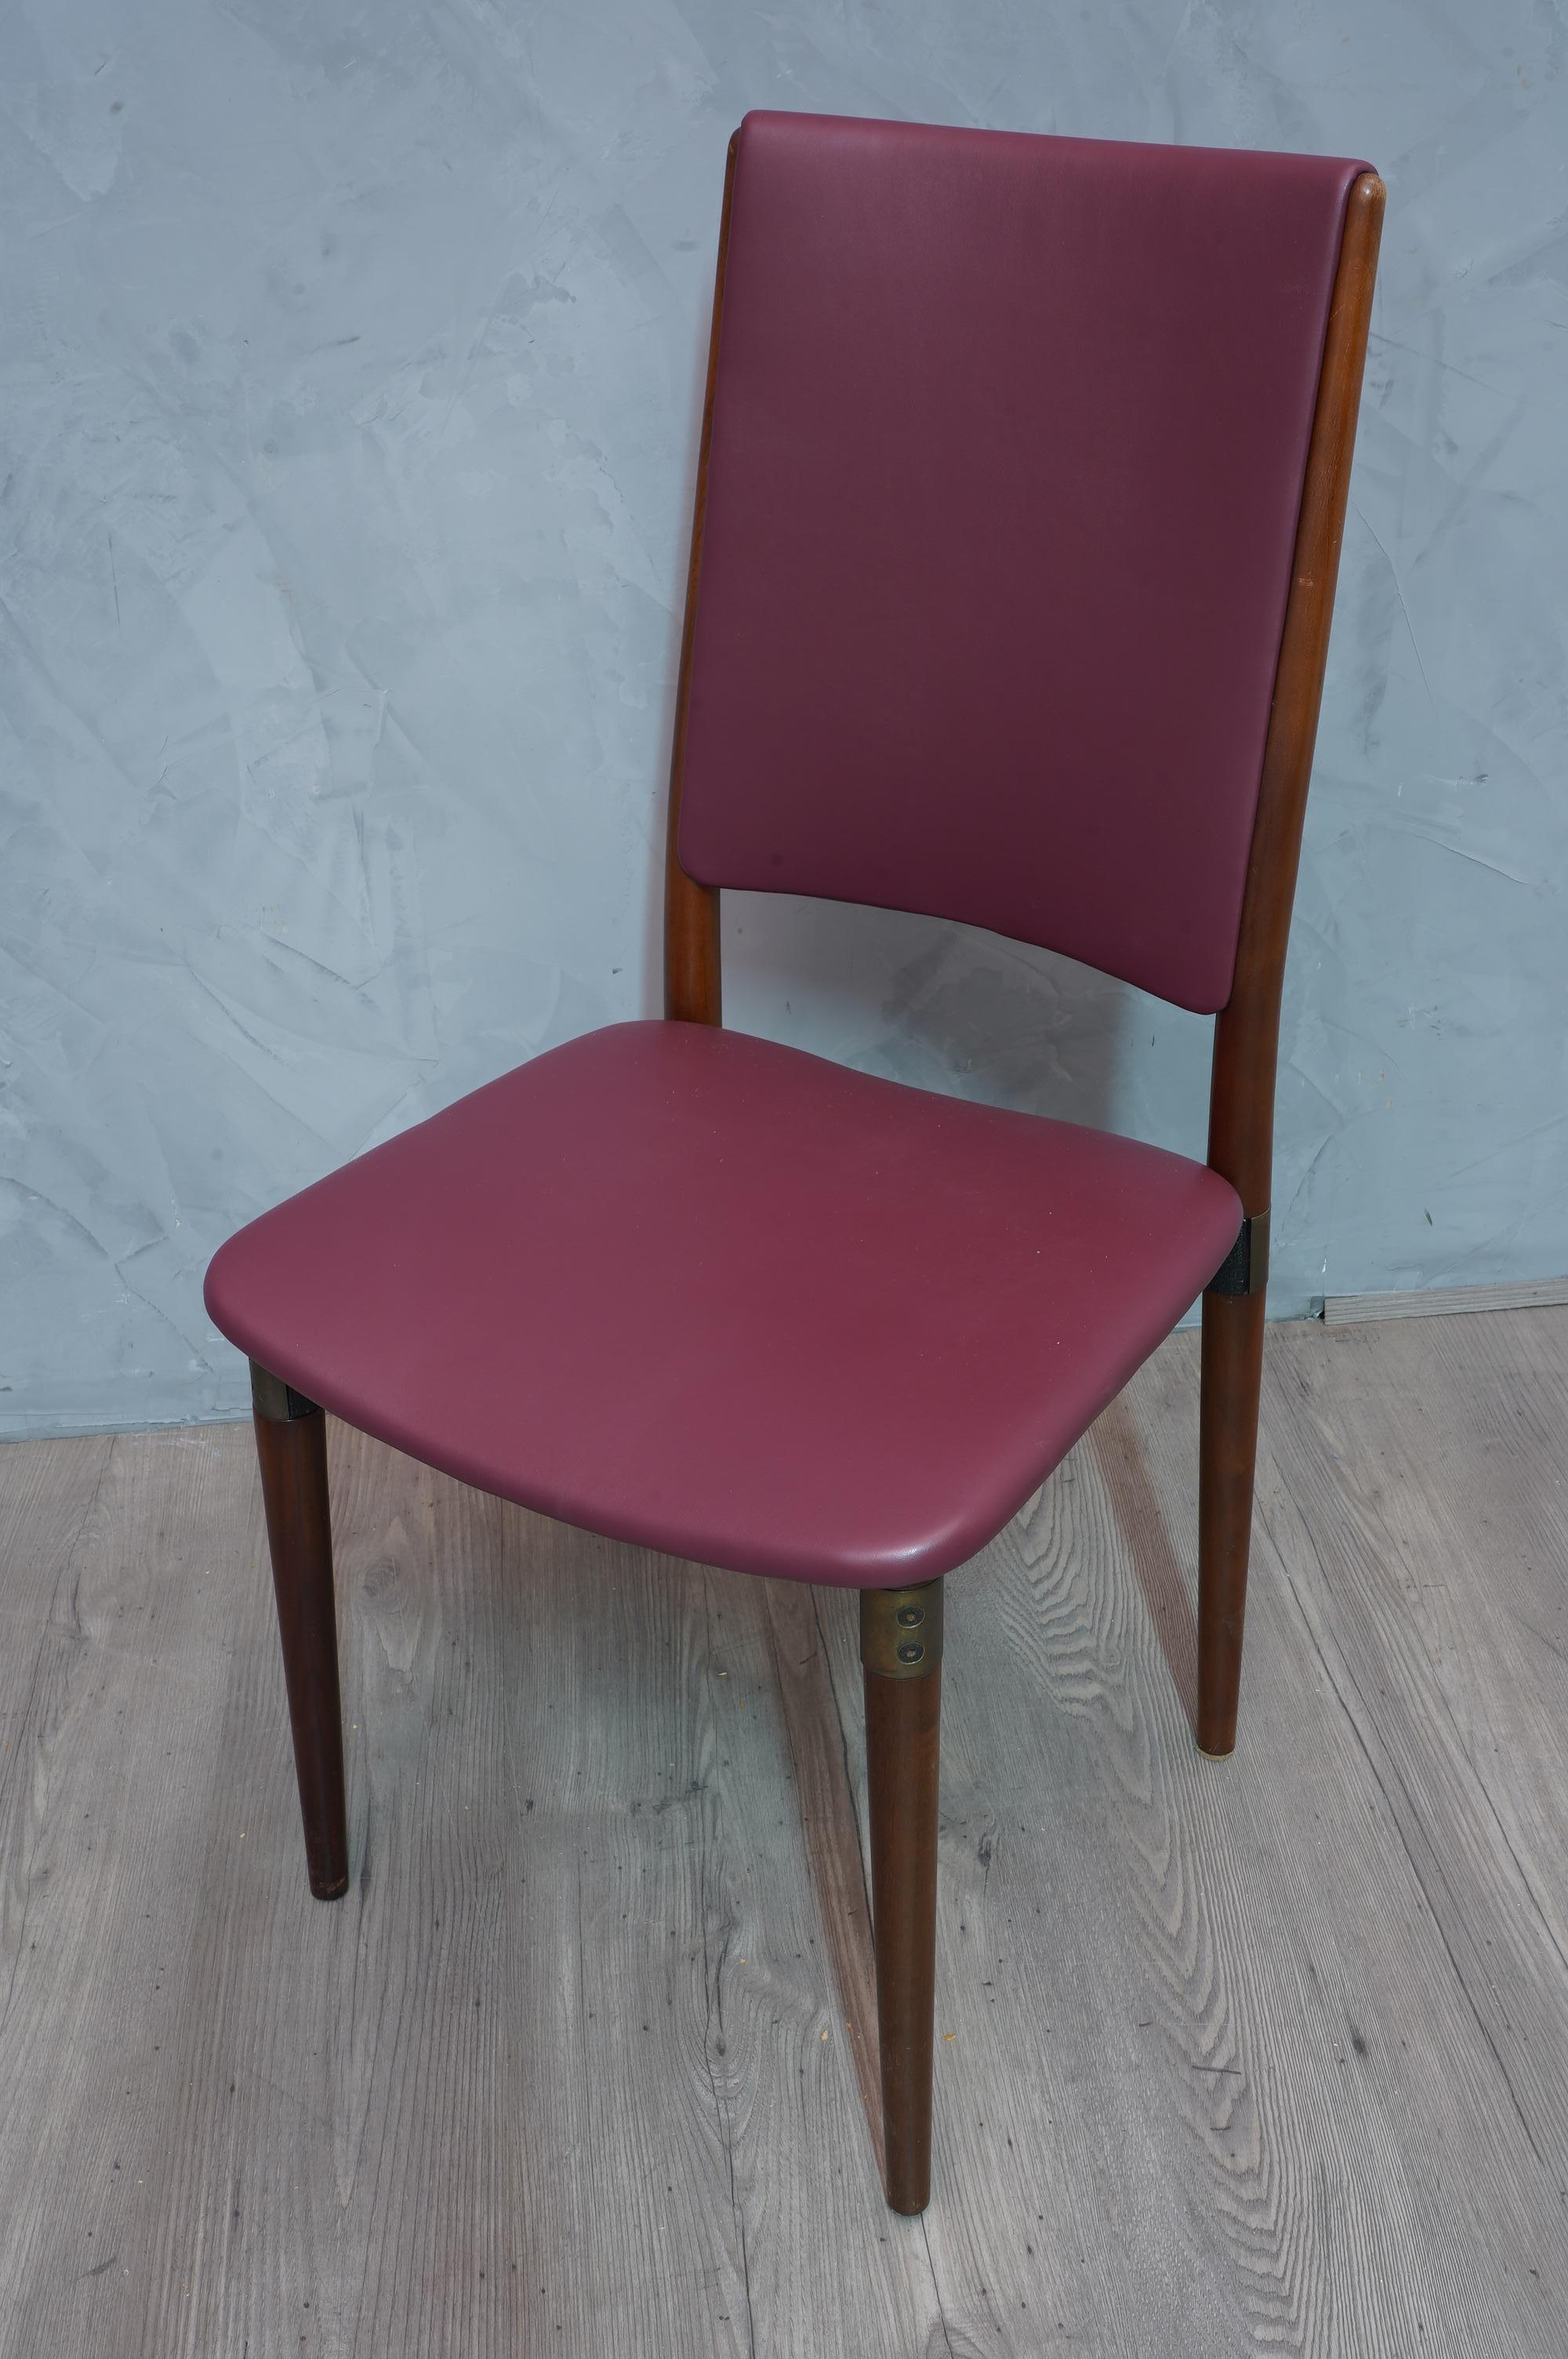 Osvaldo Borsani for Tecno Wood and Leather Chairs, 1960 For Sale 1